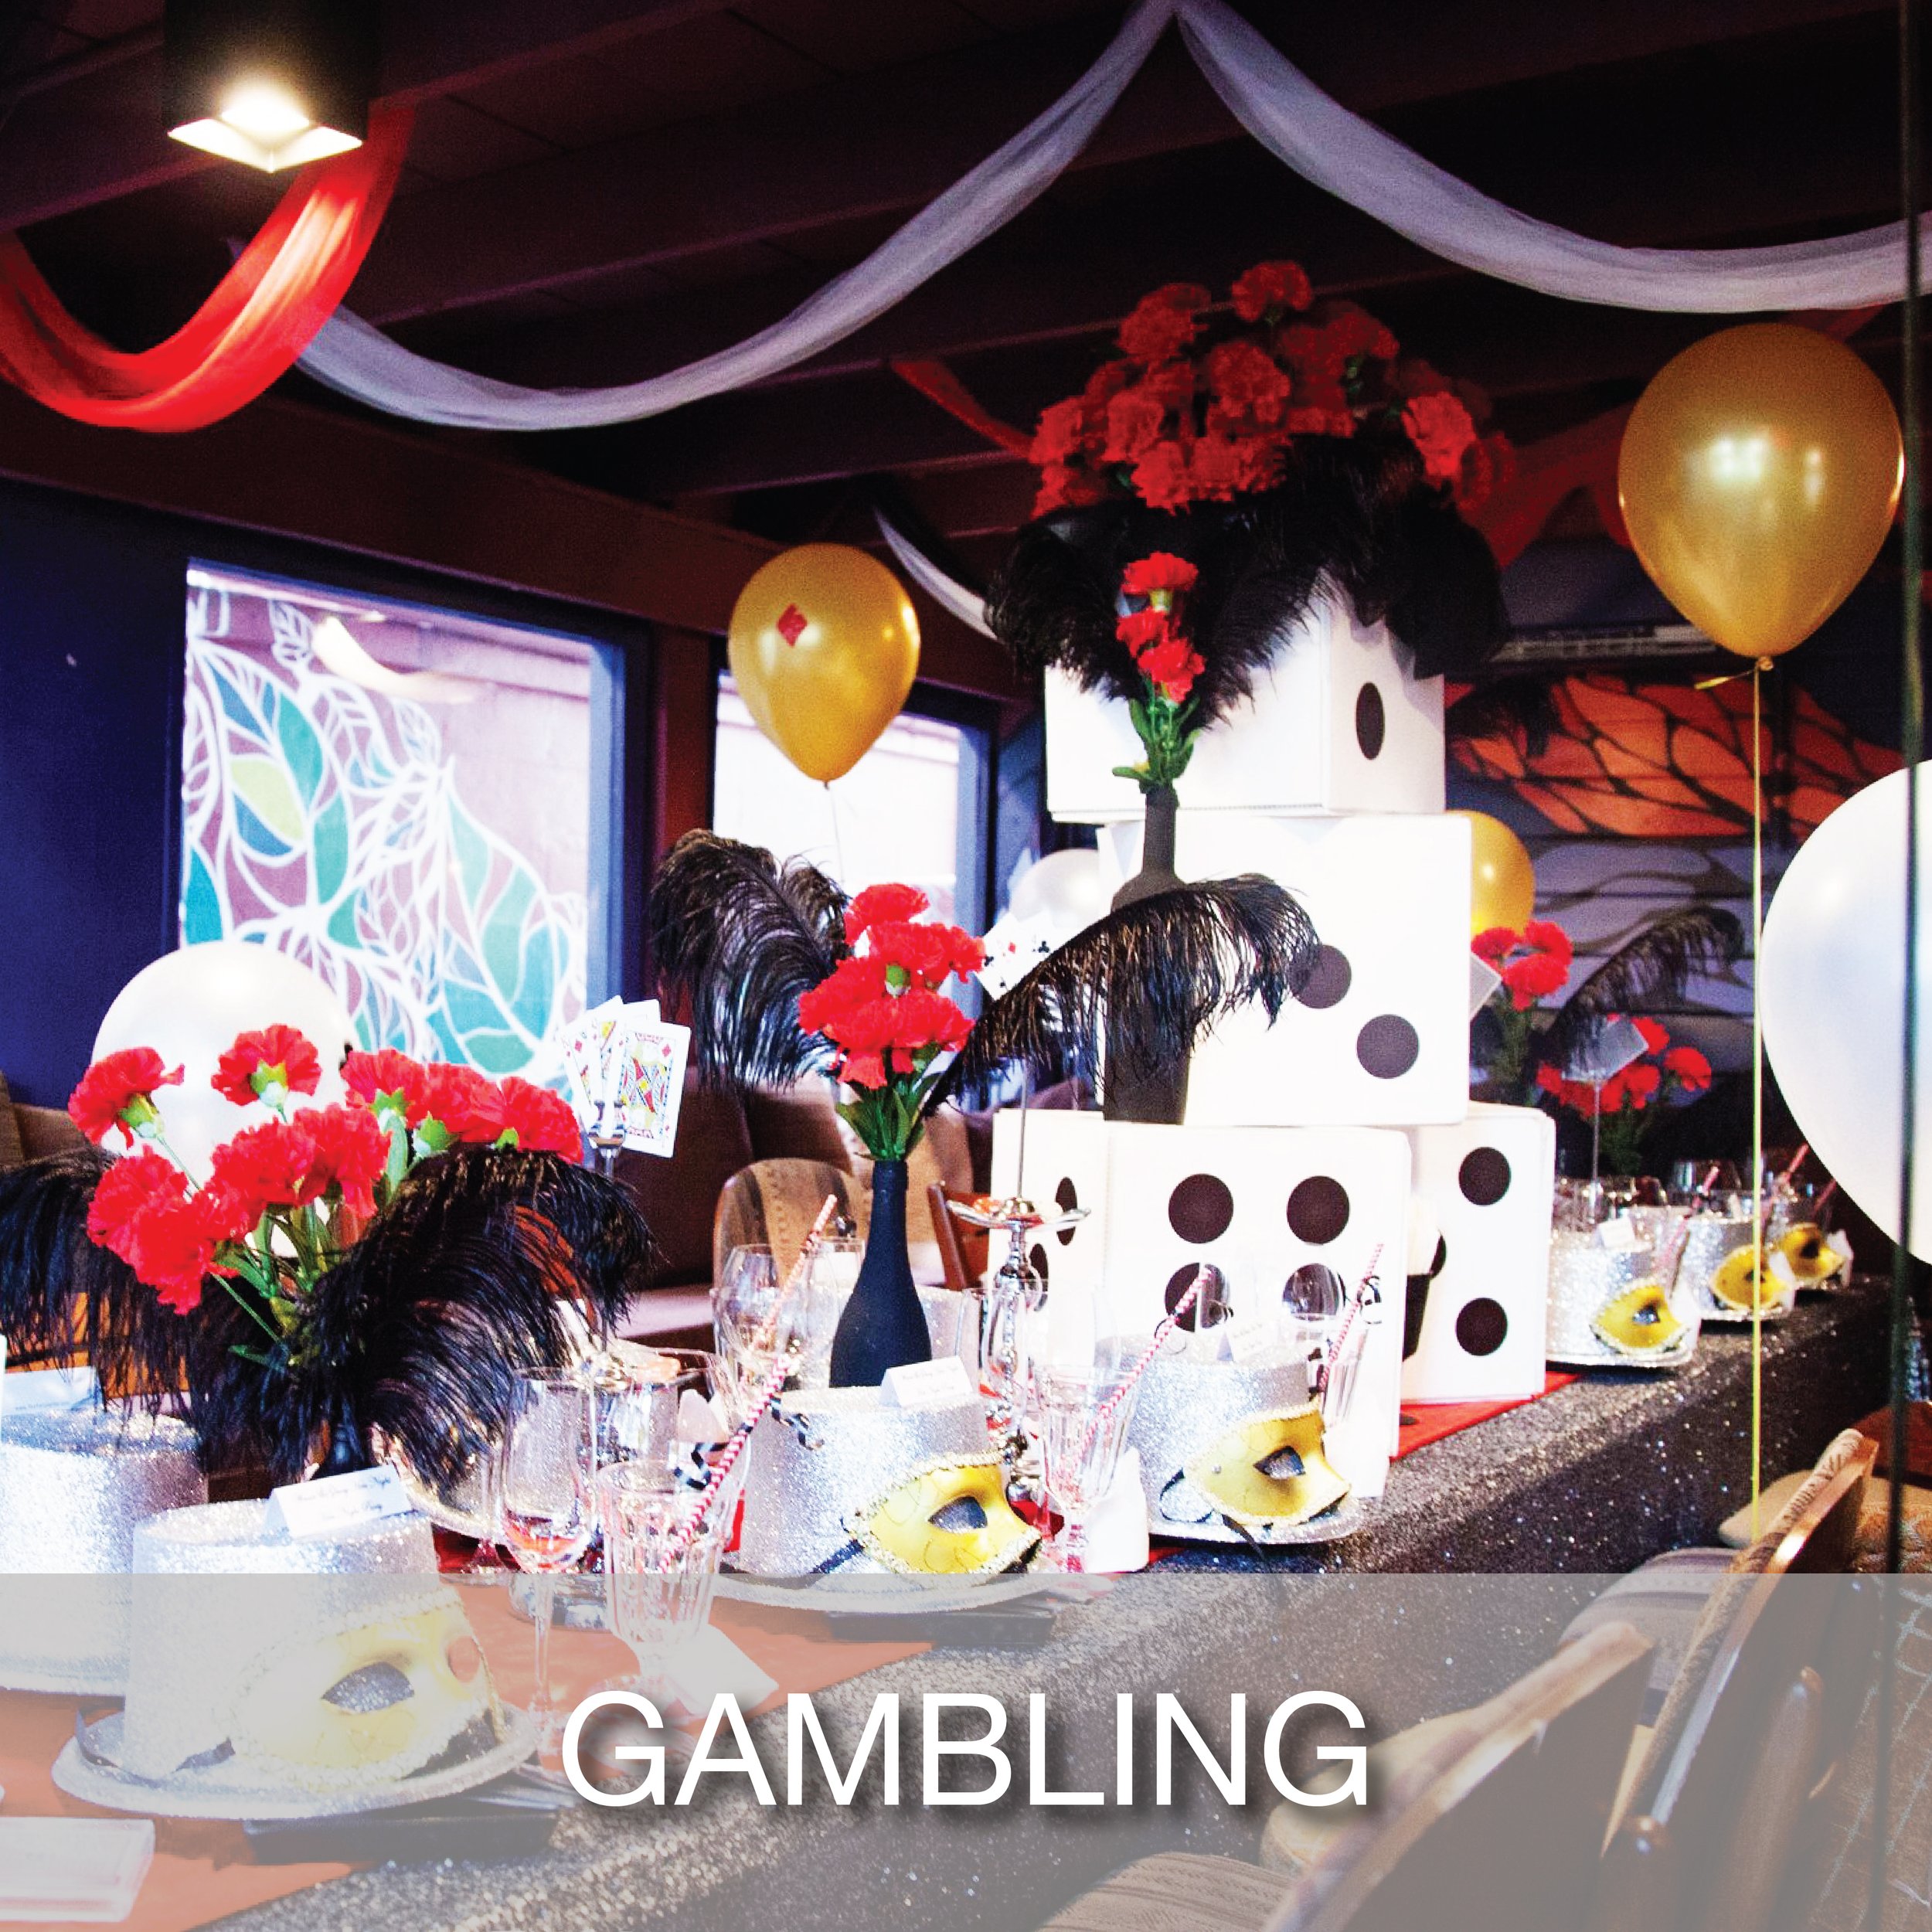 Cover_Popular Theme_Gambling-01.jpg